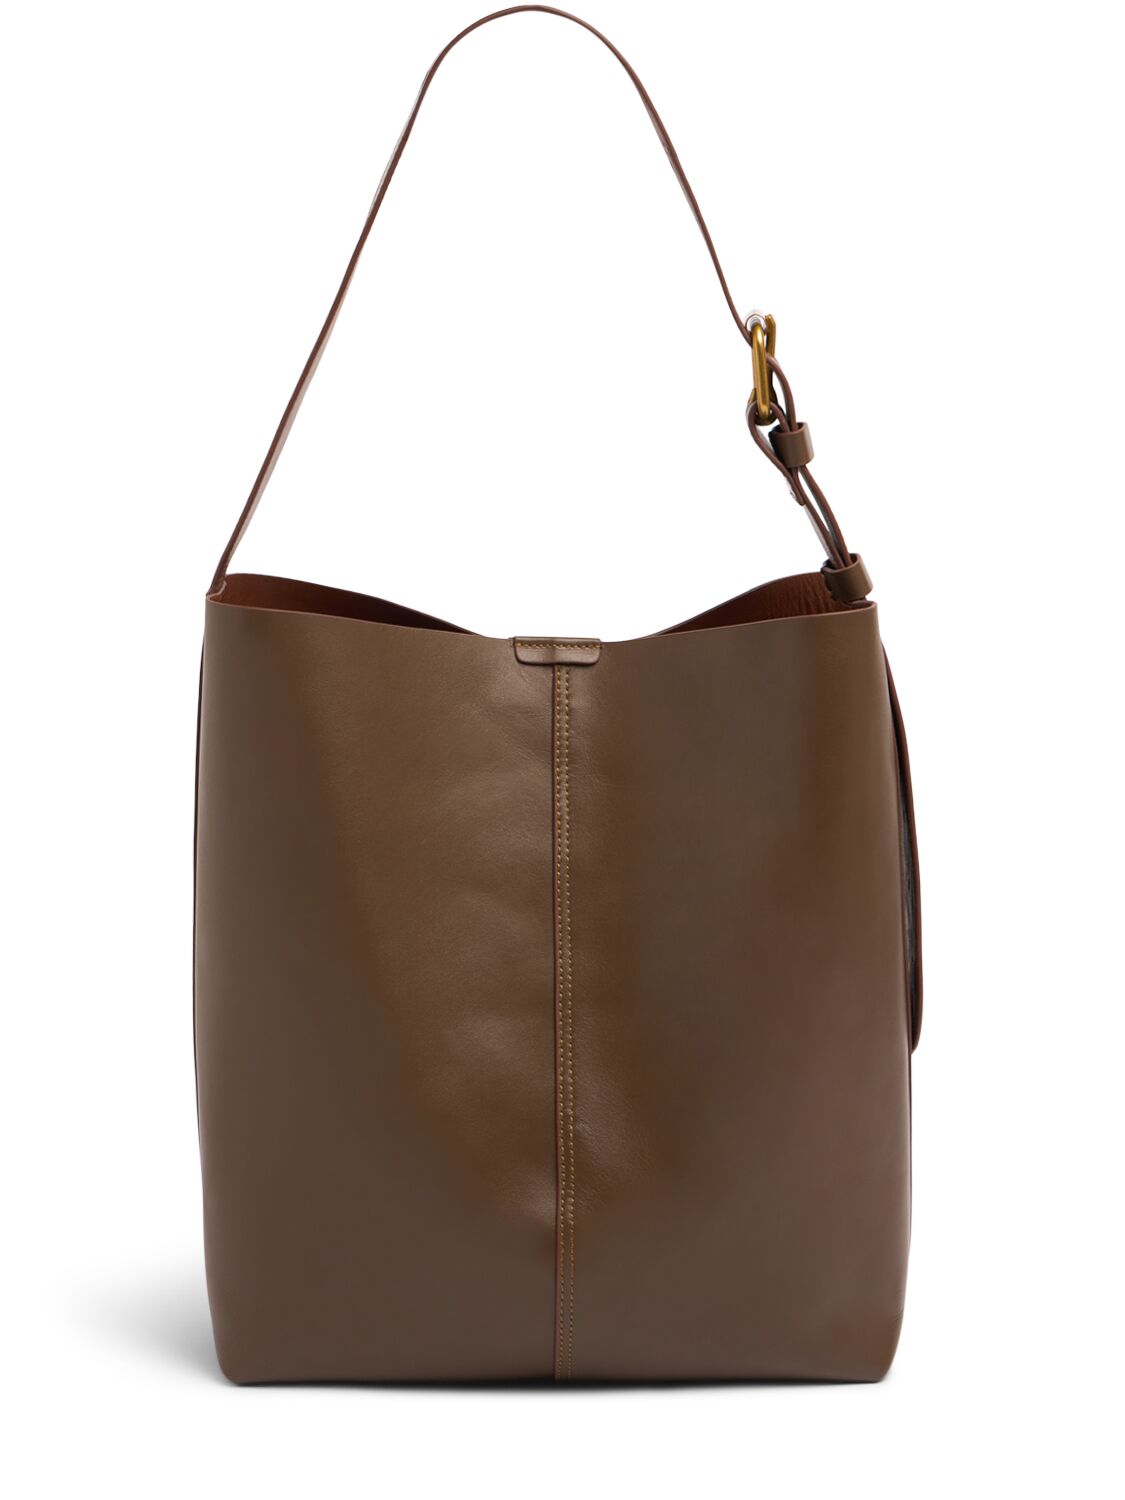 Soeur Saudade Leather Shoulder Bag In Taupe/cognac